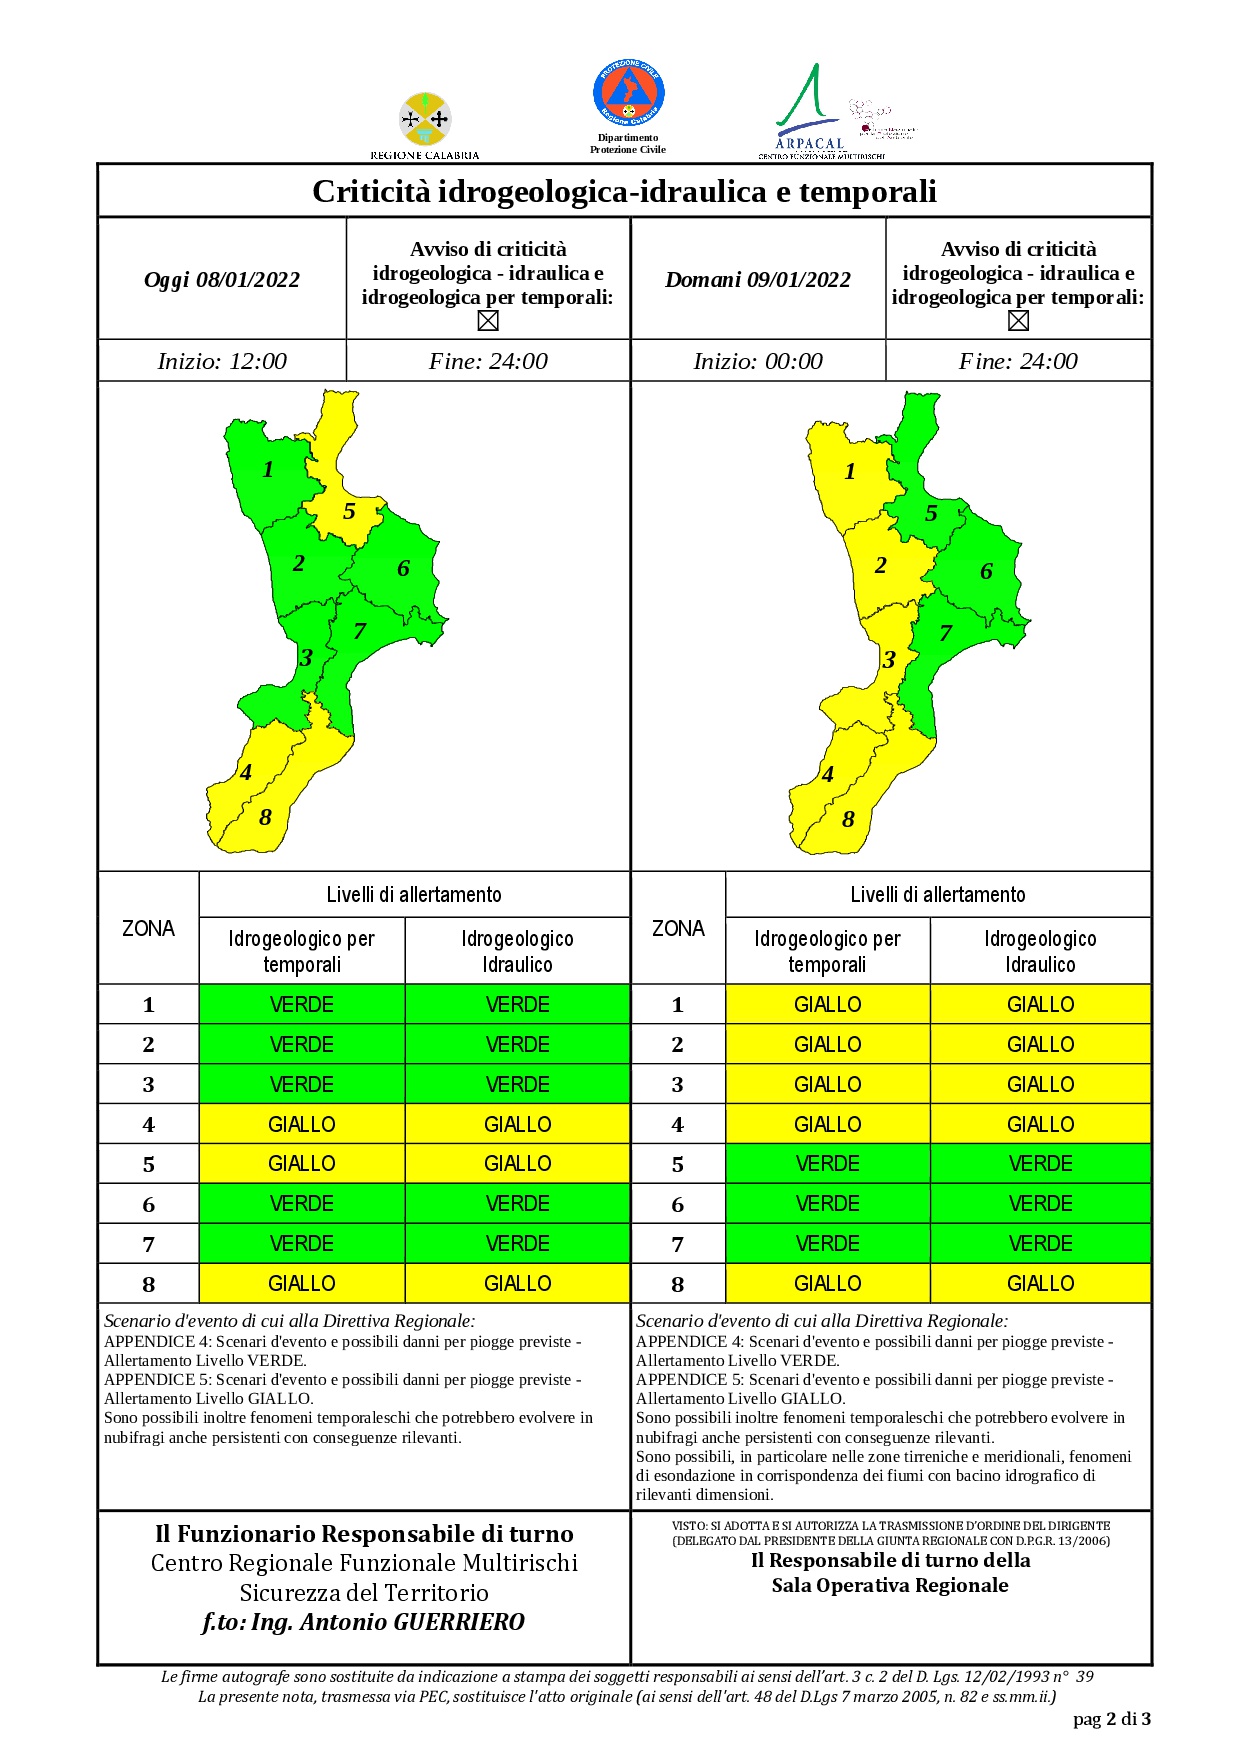 Criticità idrogeologica-idraulica e temporali in Calabria 08-01-2022